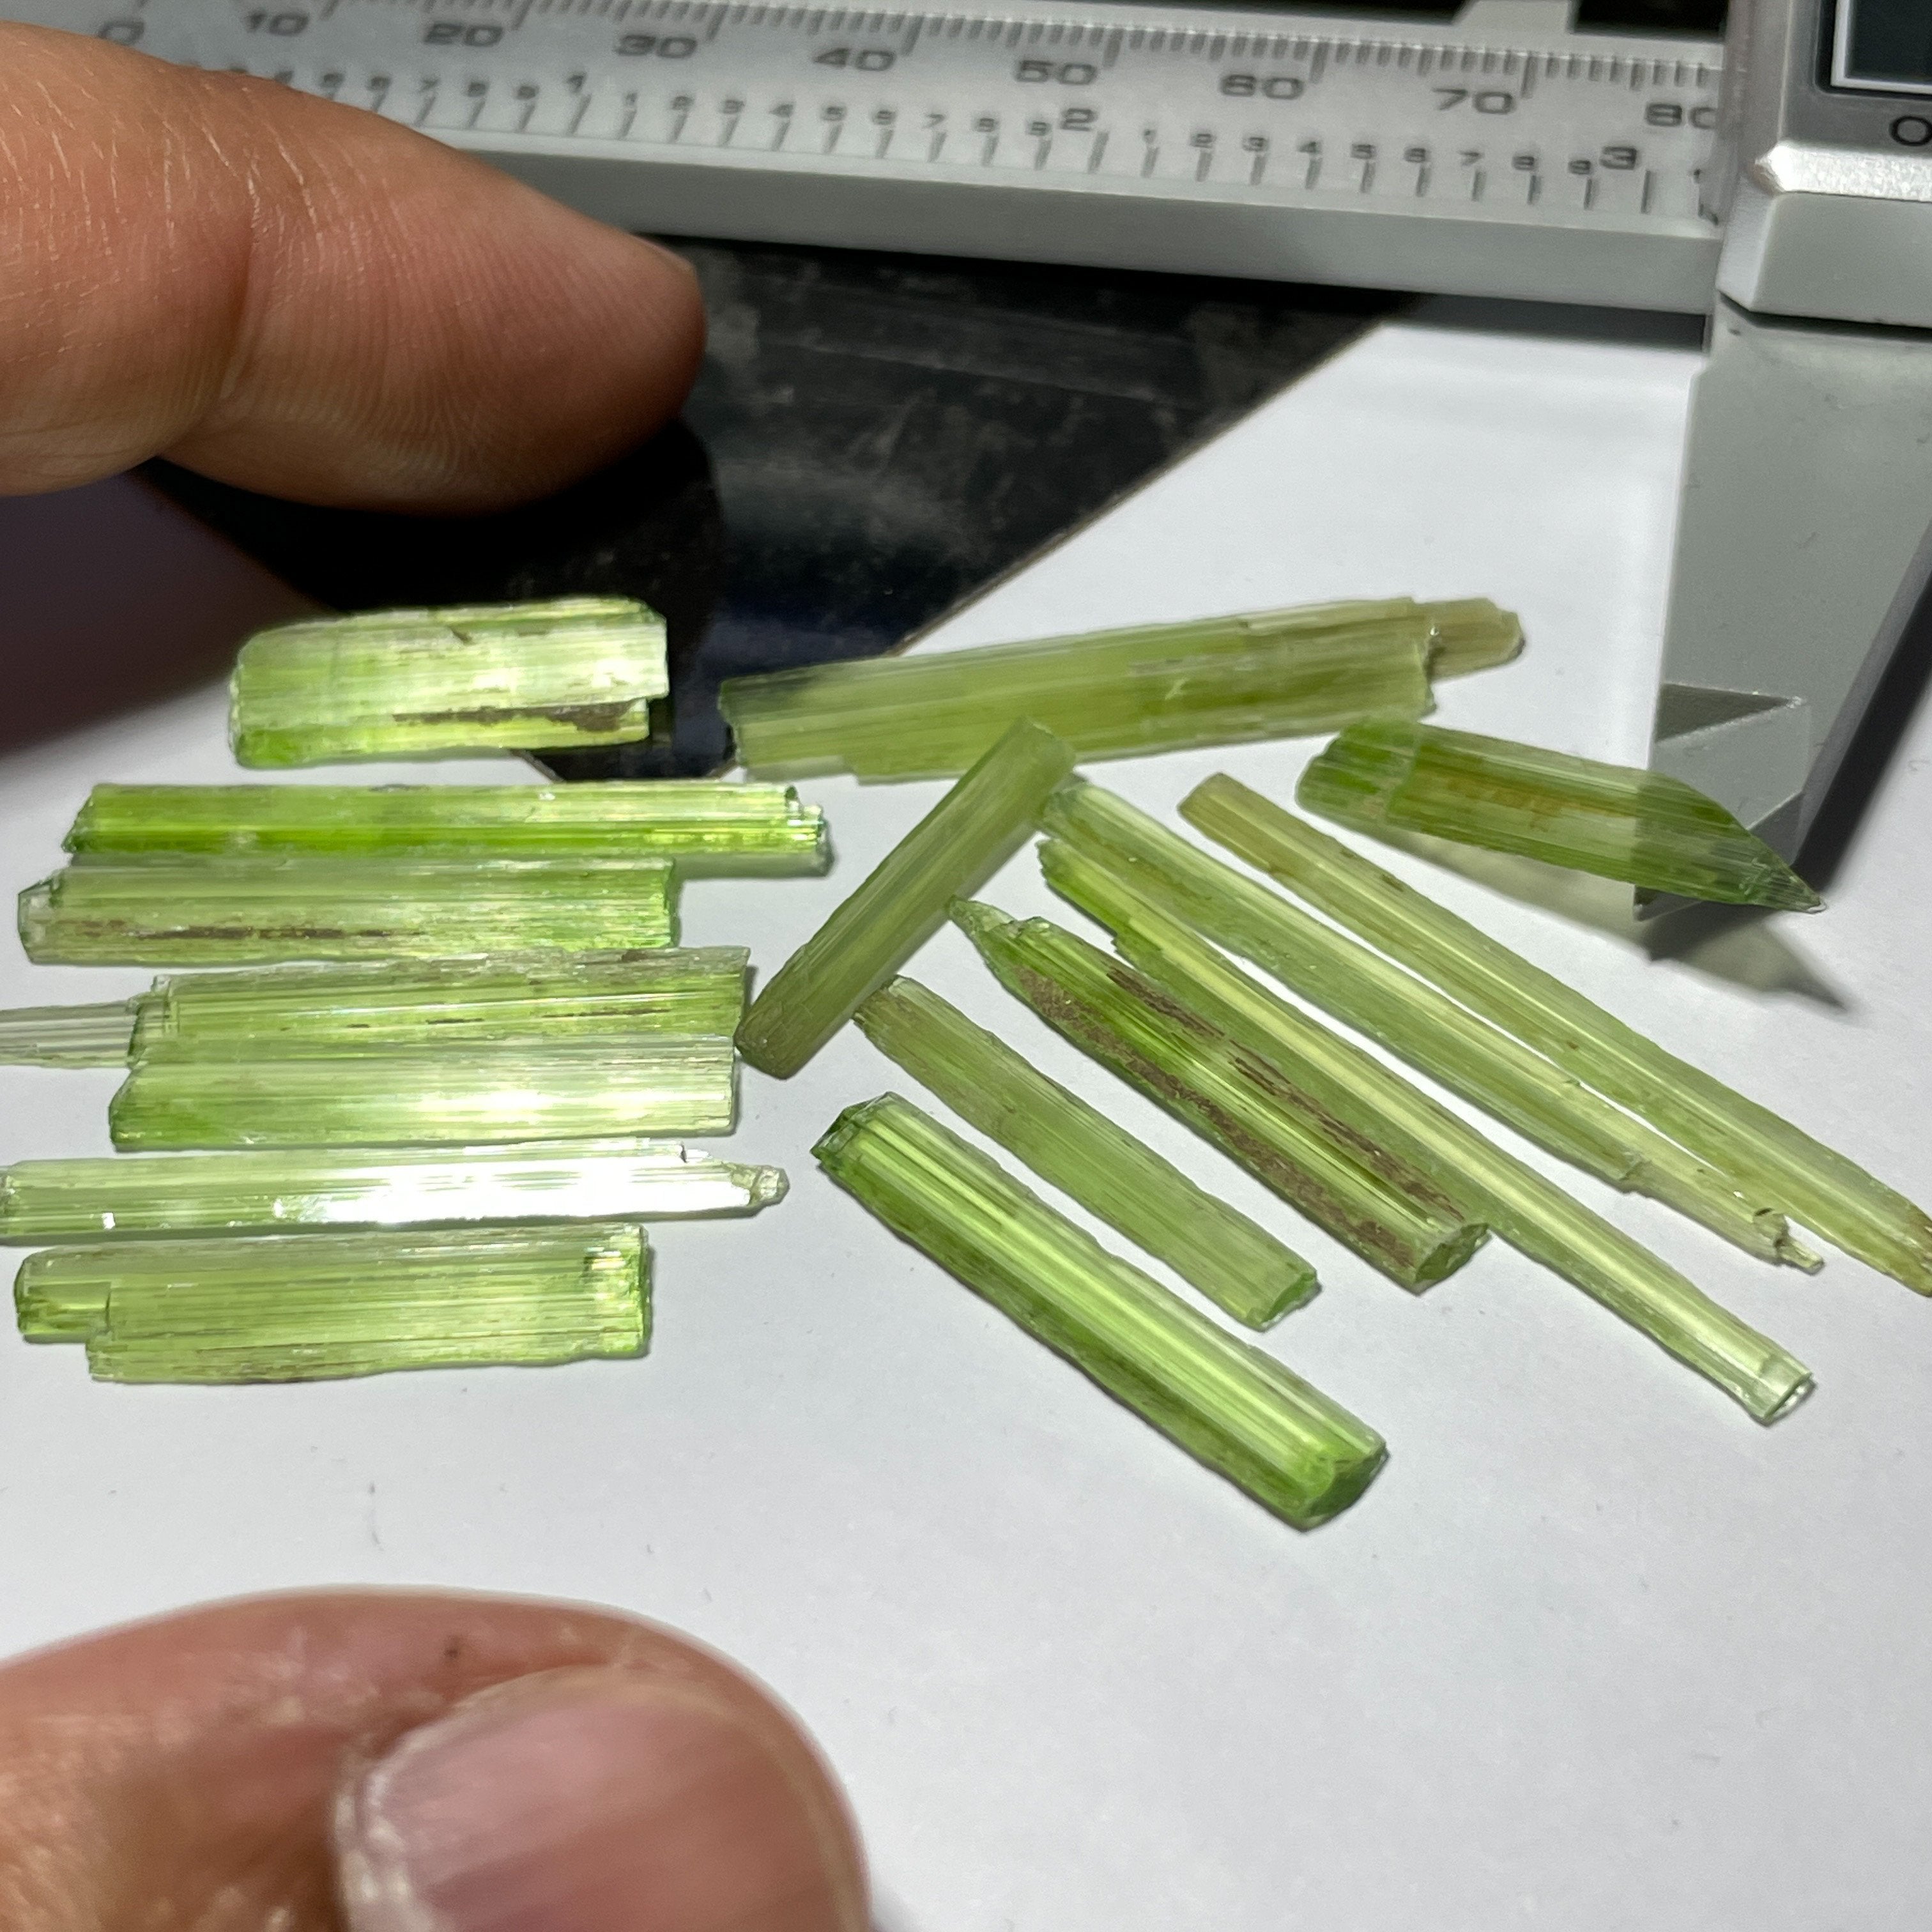 27.88Ct Tremolite Crystal Lot Merelani Tanzania 0.82Ct - 3.34Ct Very Rare